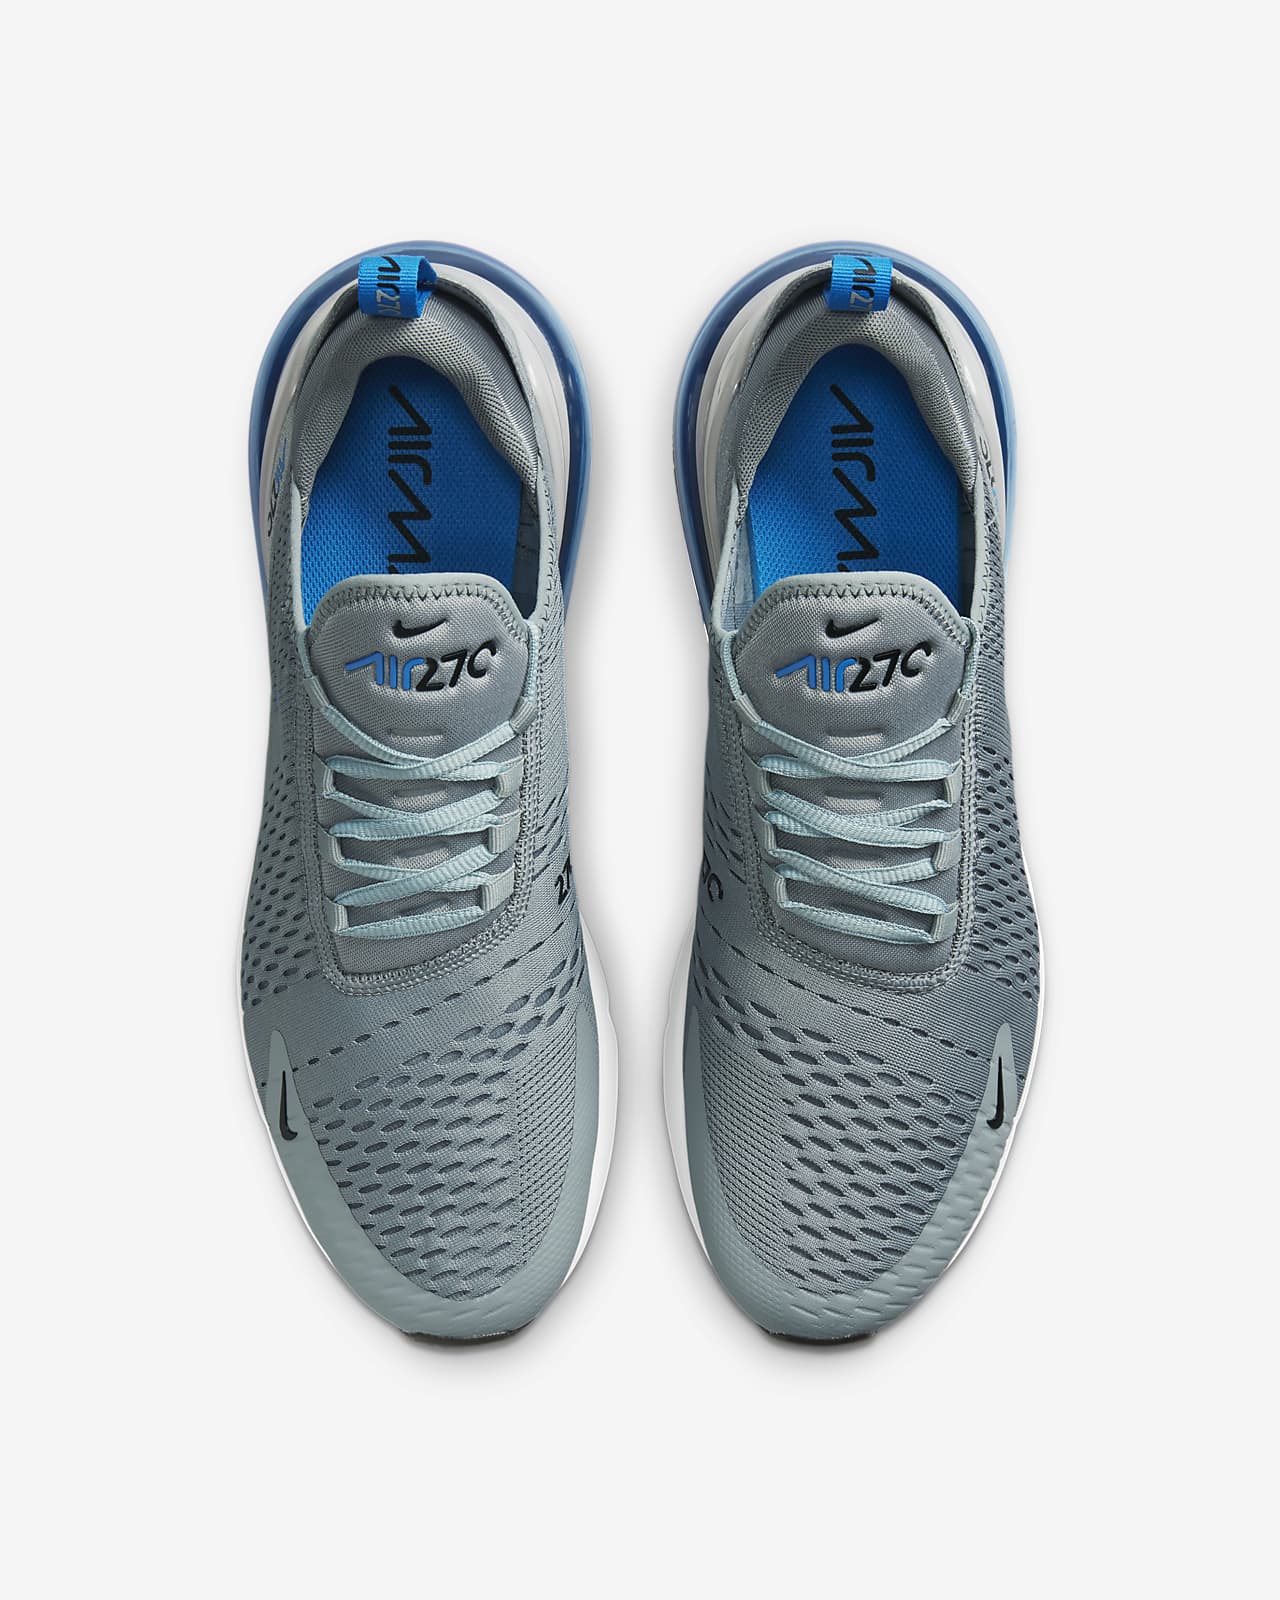 Nike Air Max 270 Essential Men's Shoes